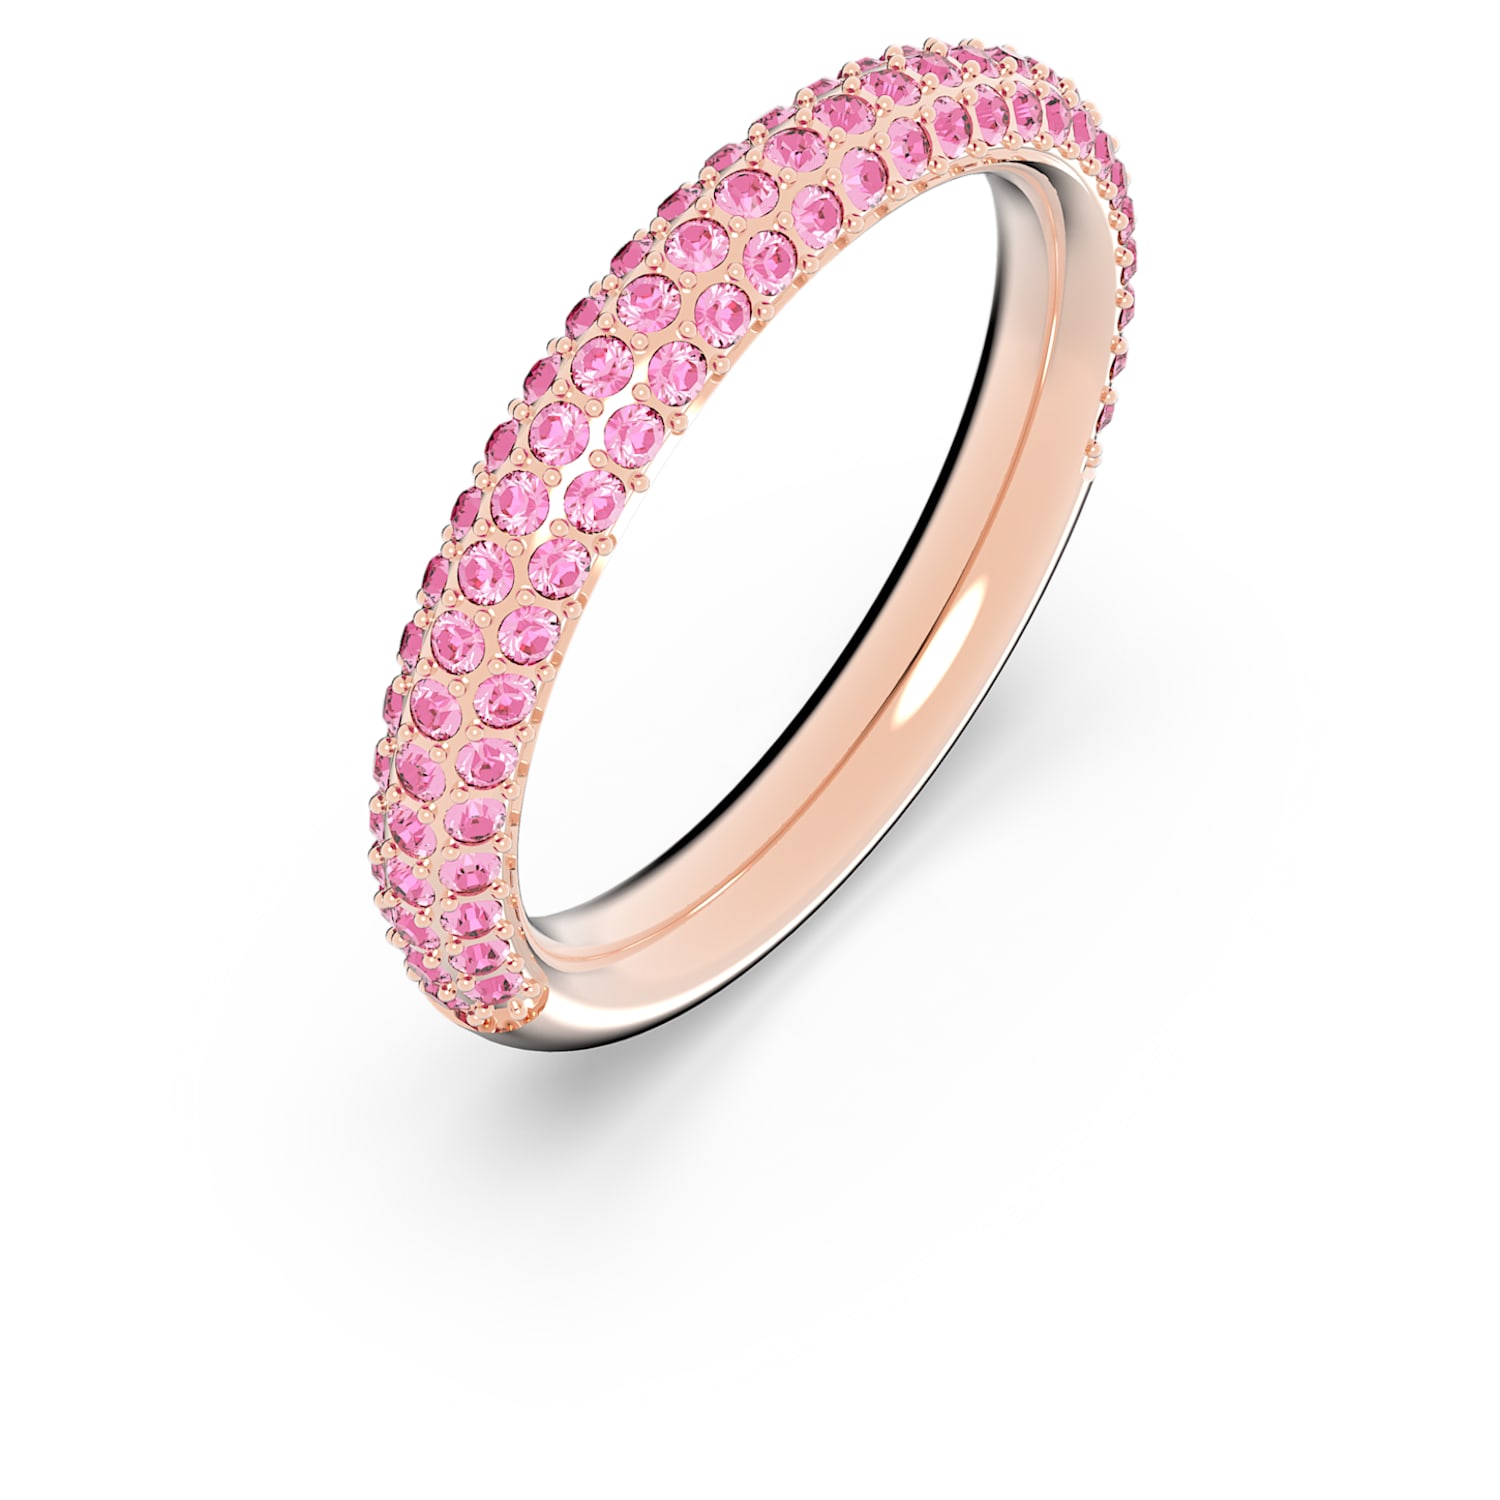 Stone ring, Pink, Rose gold-tone plated | Swarovski